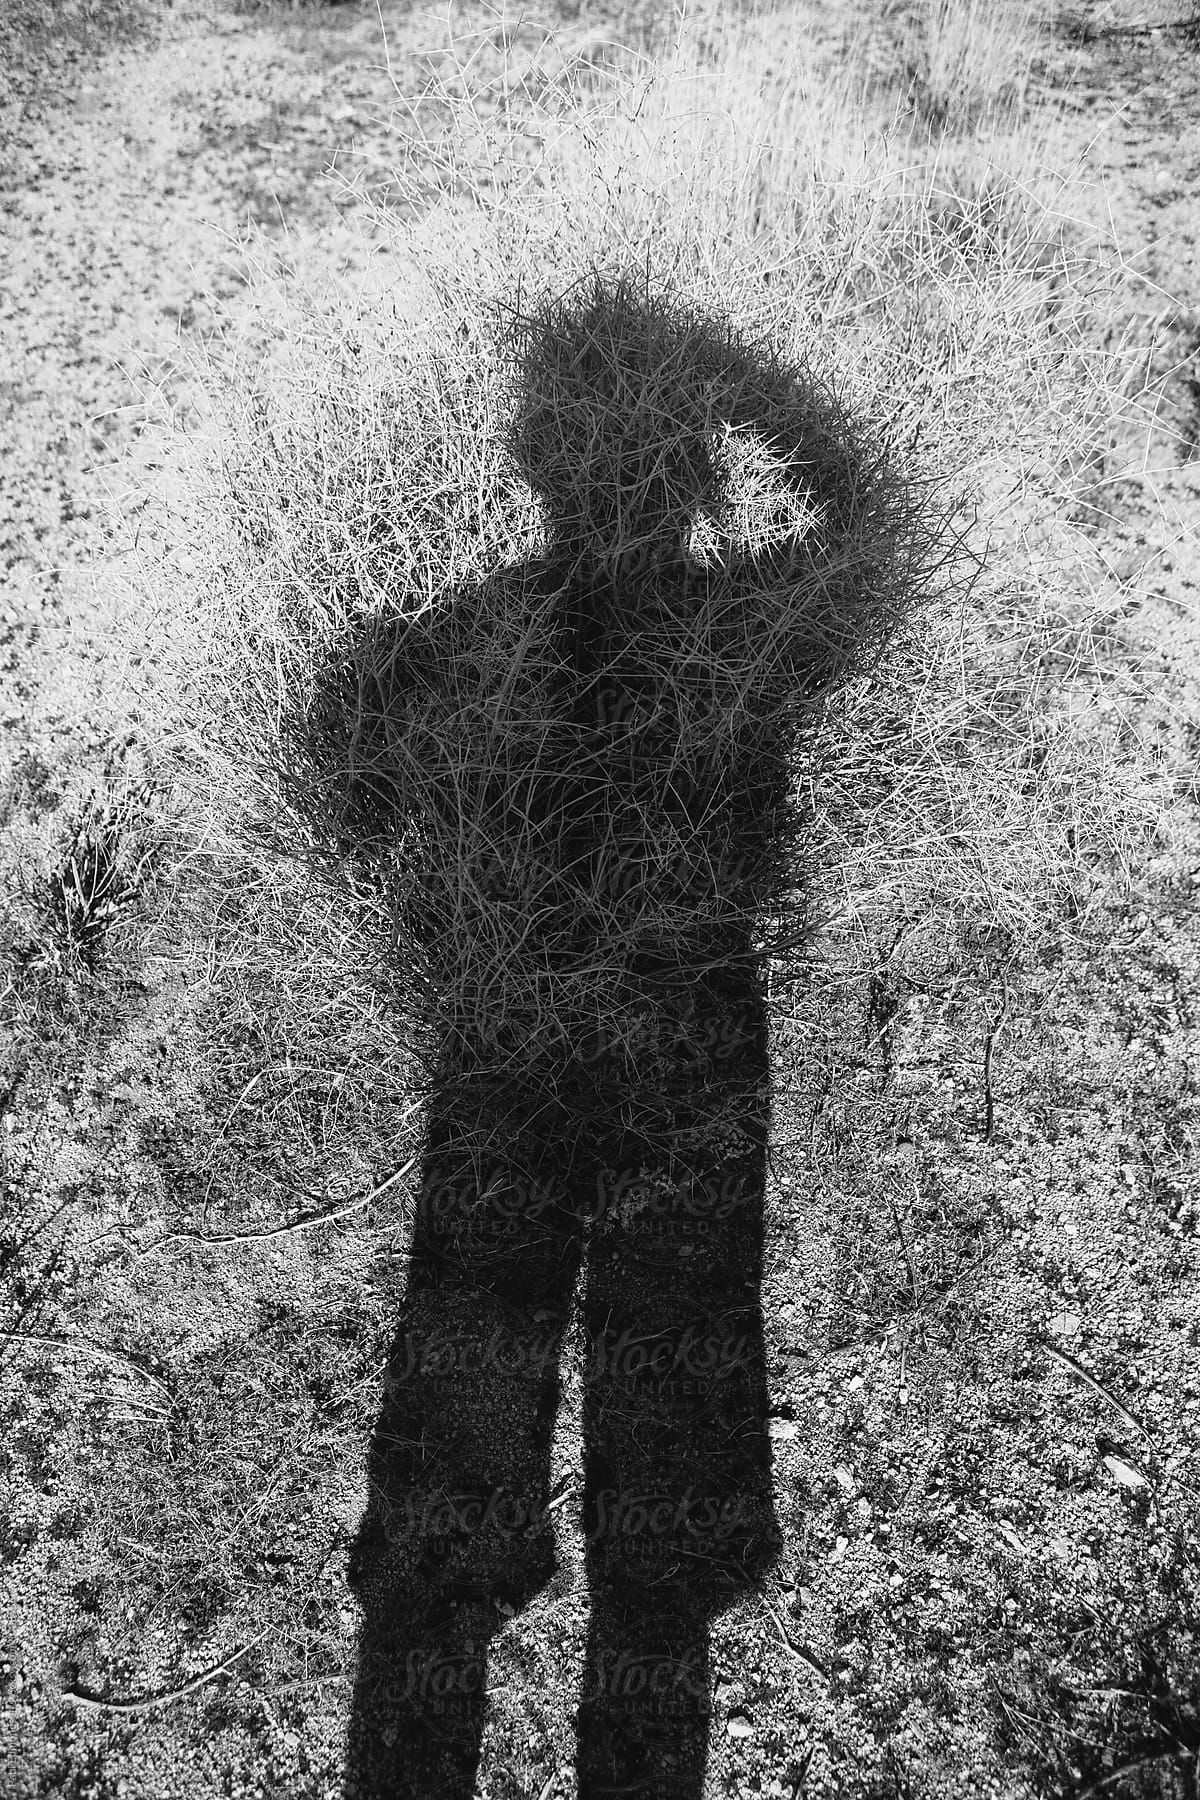 Shadow of photographer taking self portrait